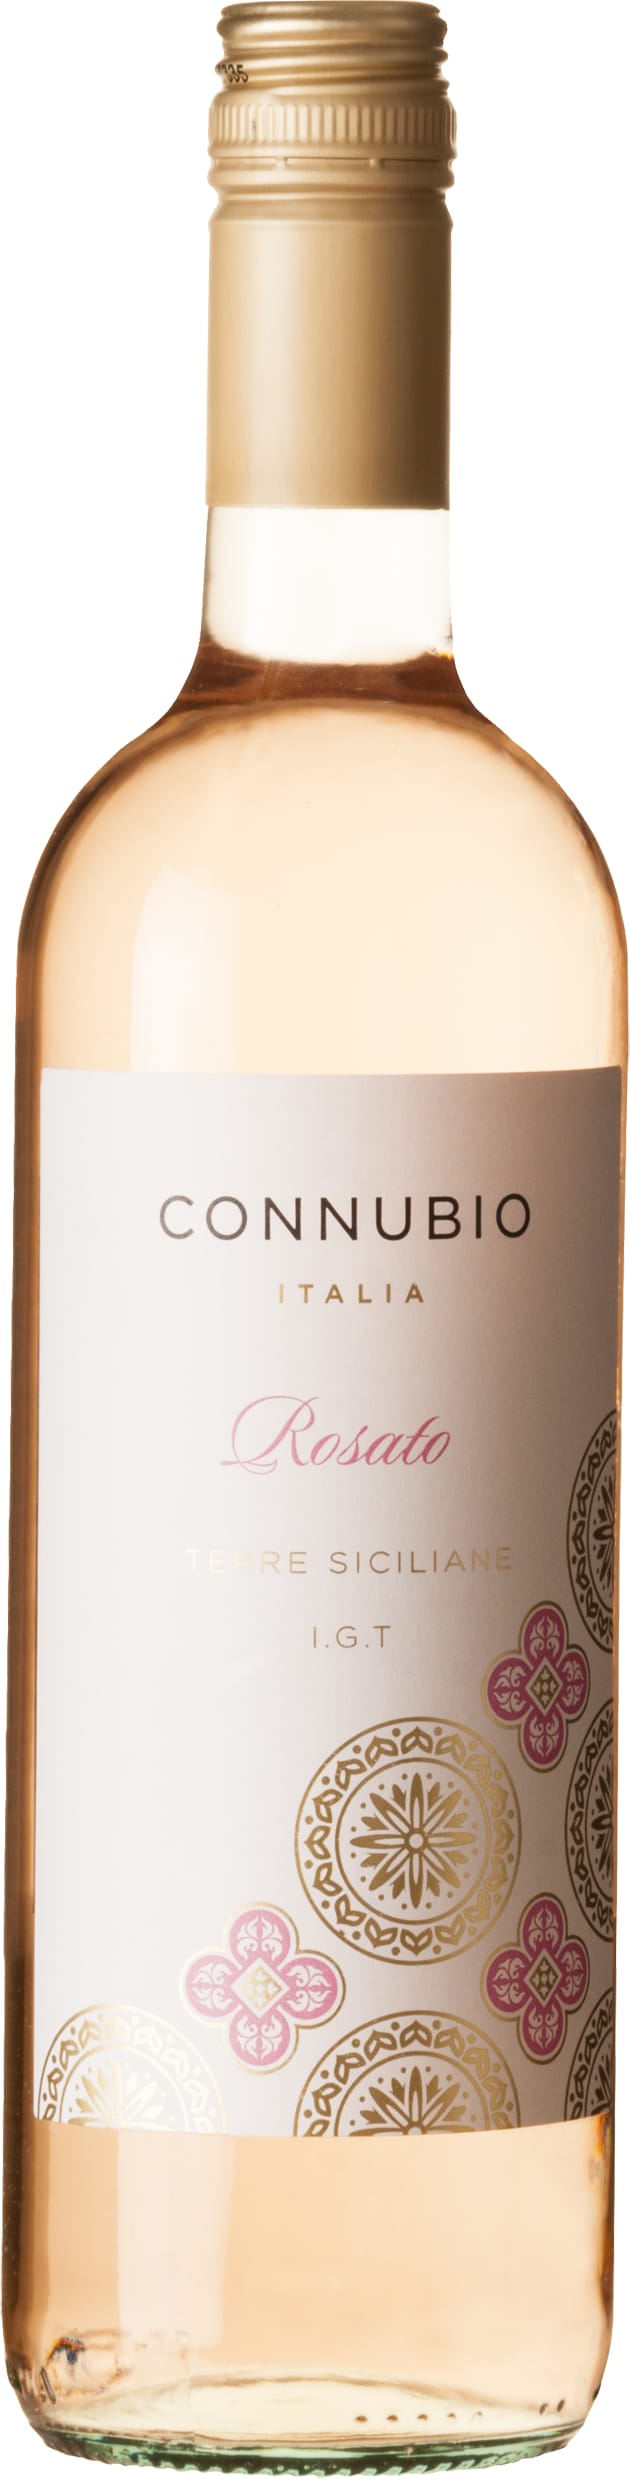 Rosato IGT Terre Siciliane 22 Connubio 75cl - Buy Connubio Wines from GREAT WINES DIRECT wine shop